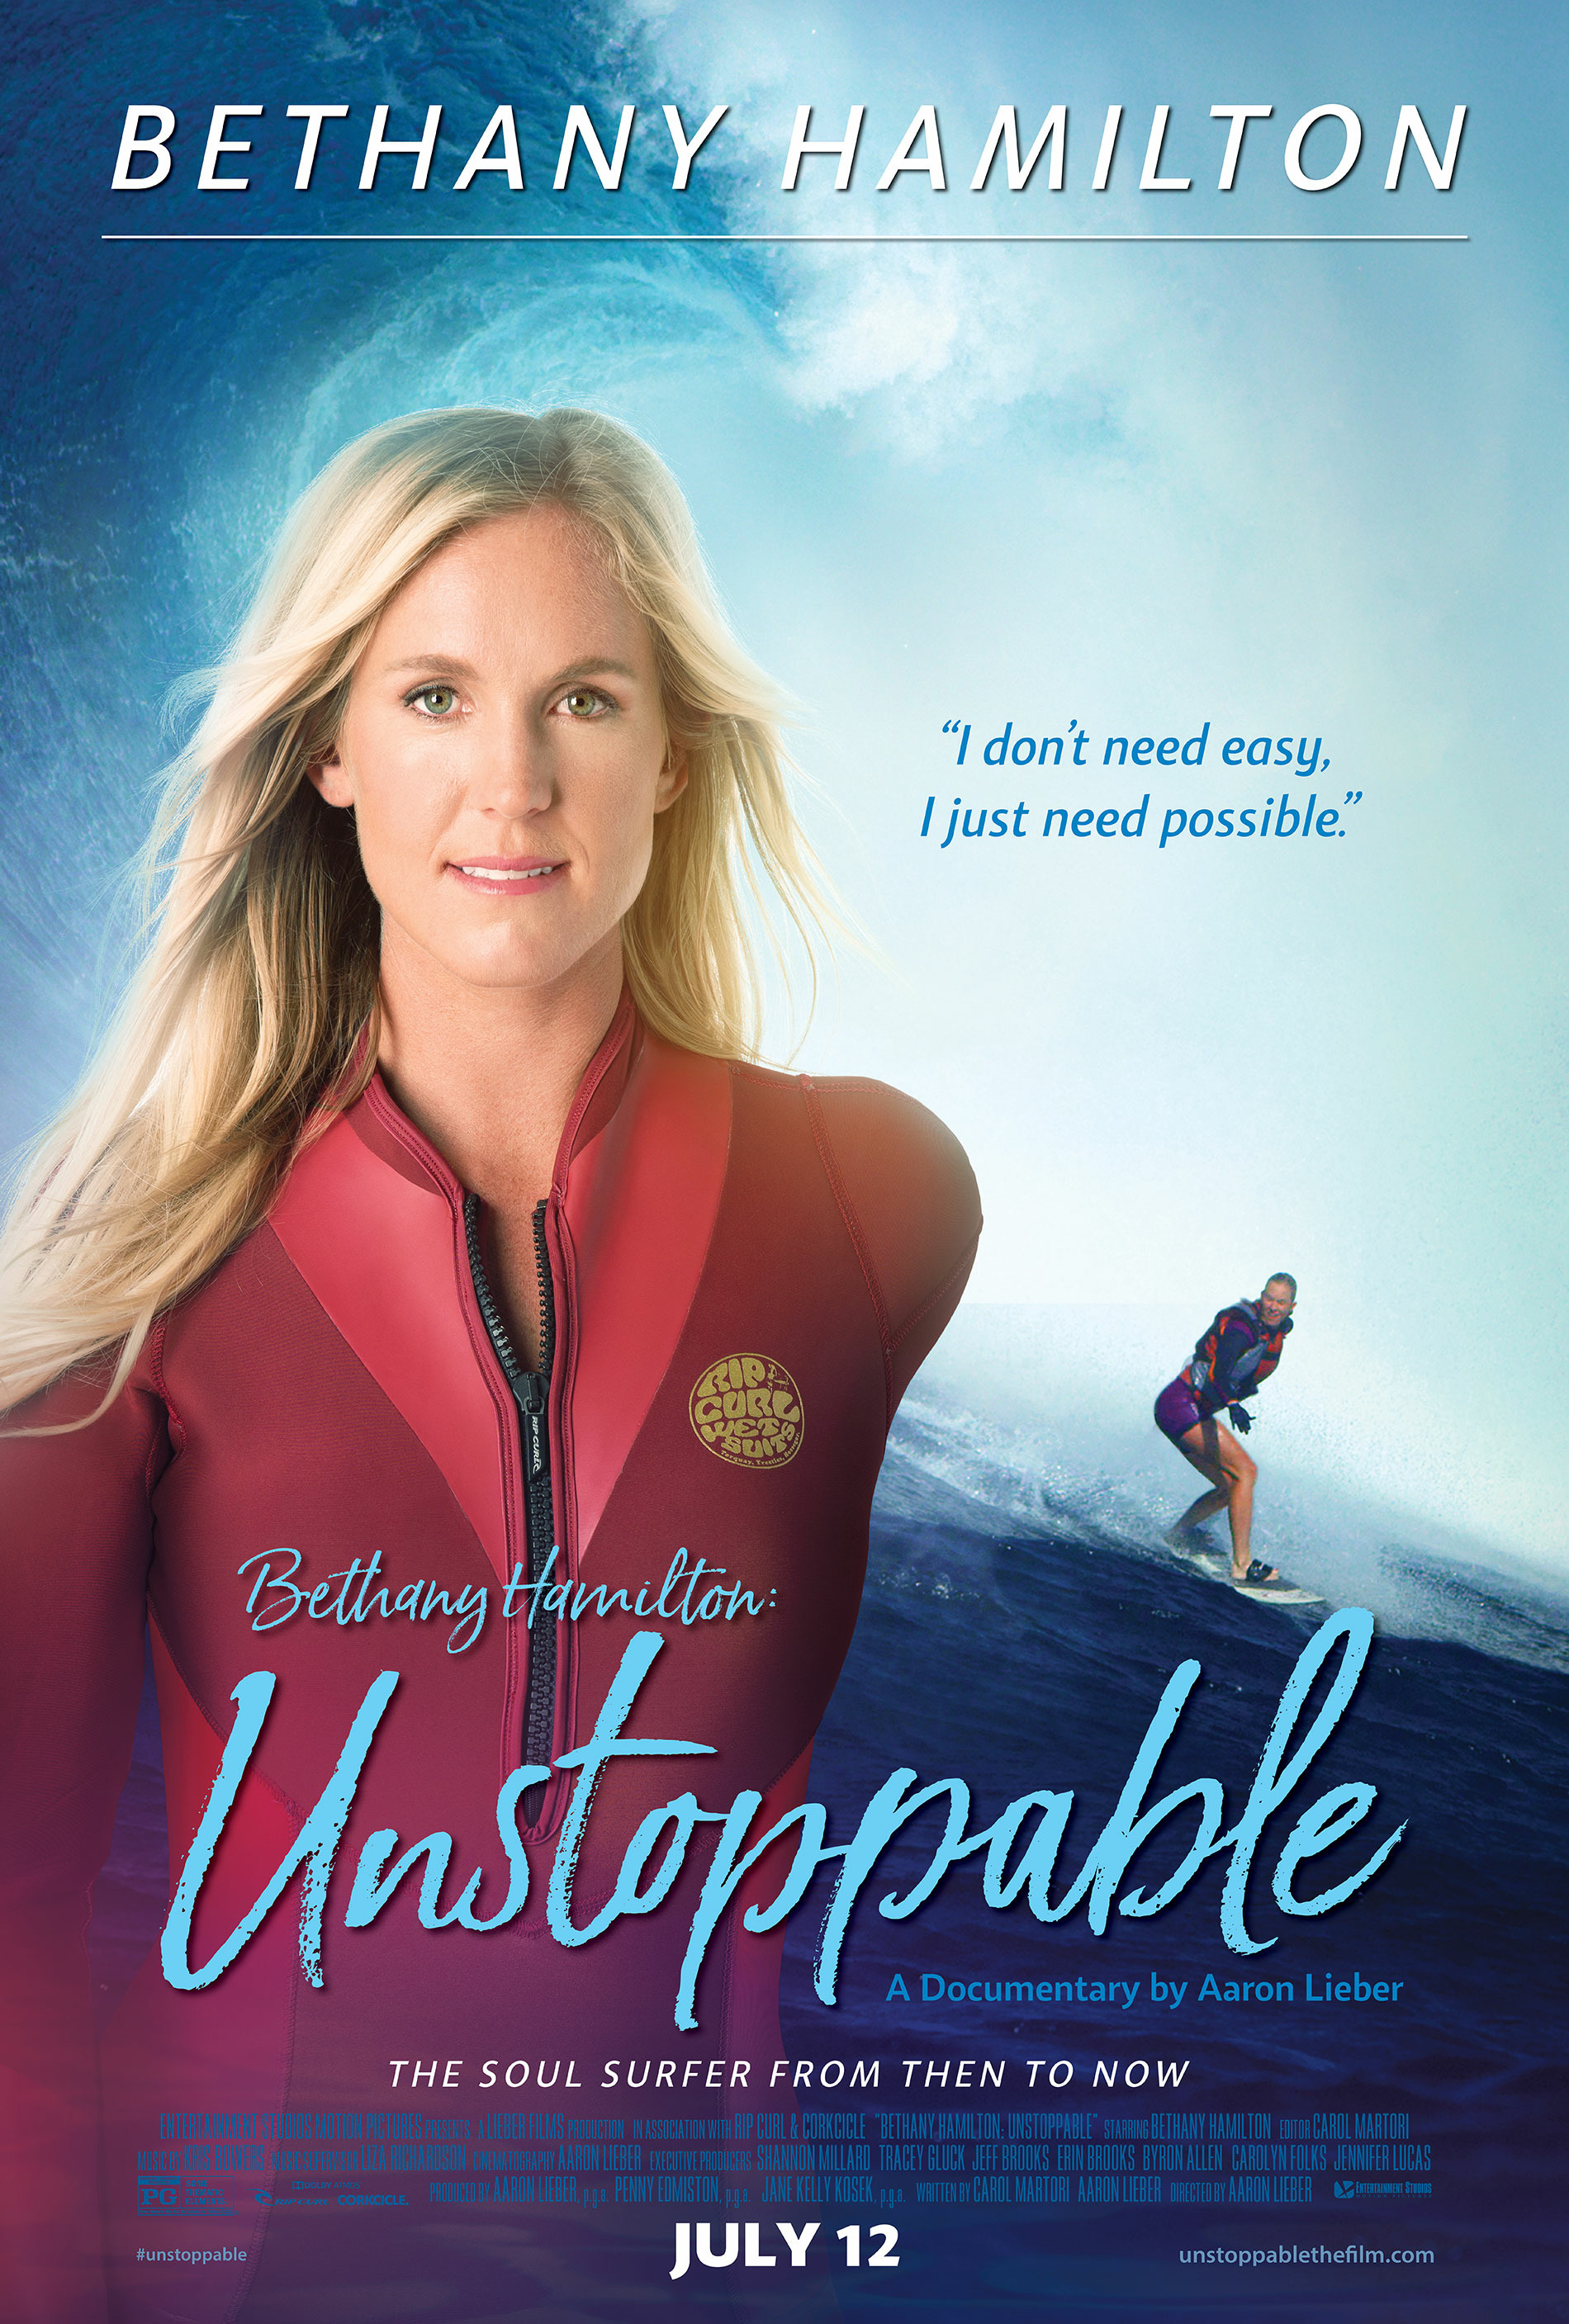 Mega Sized Movie Poster Image for Bethany Hamilton: Unstoppable 